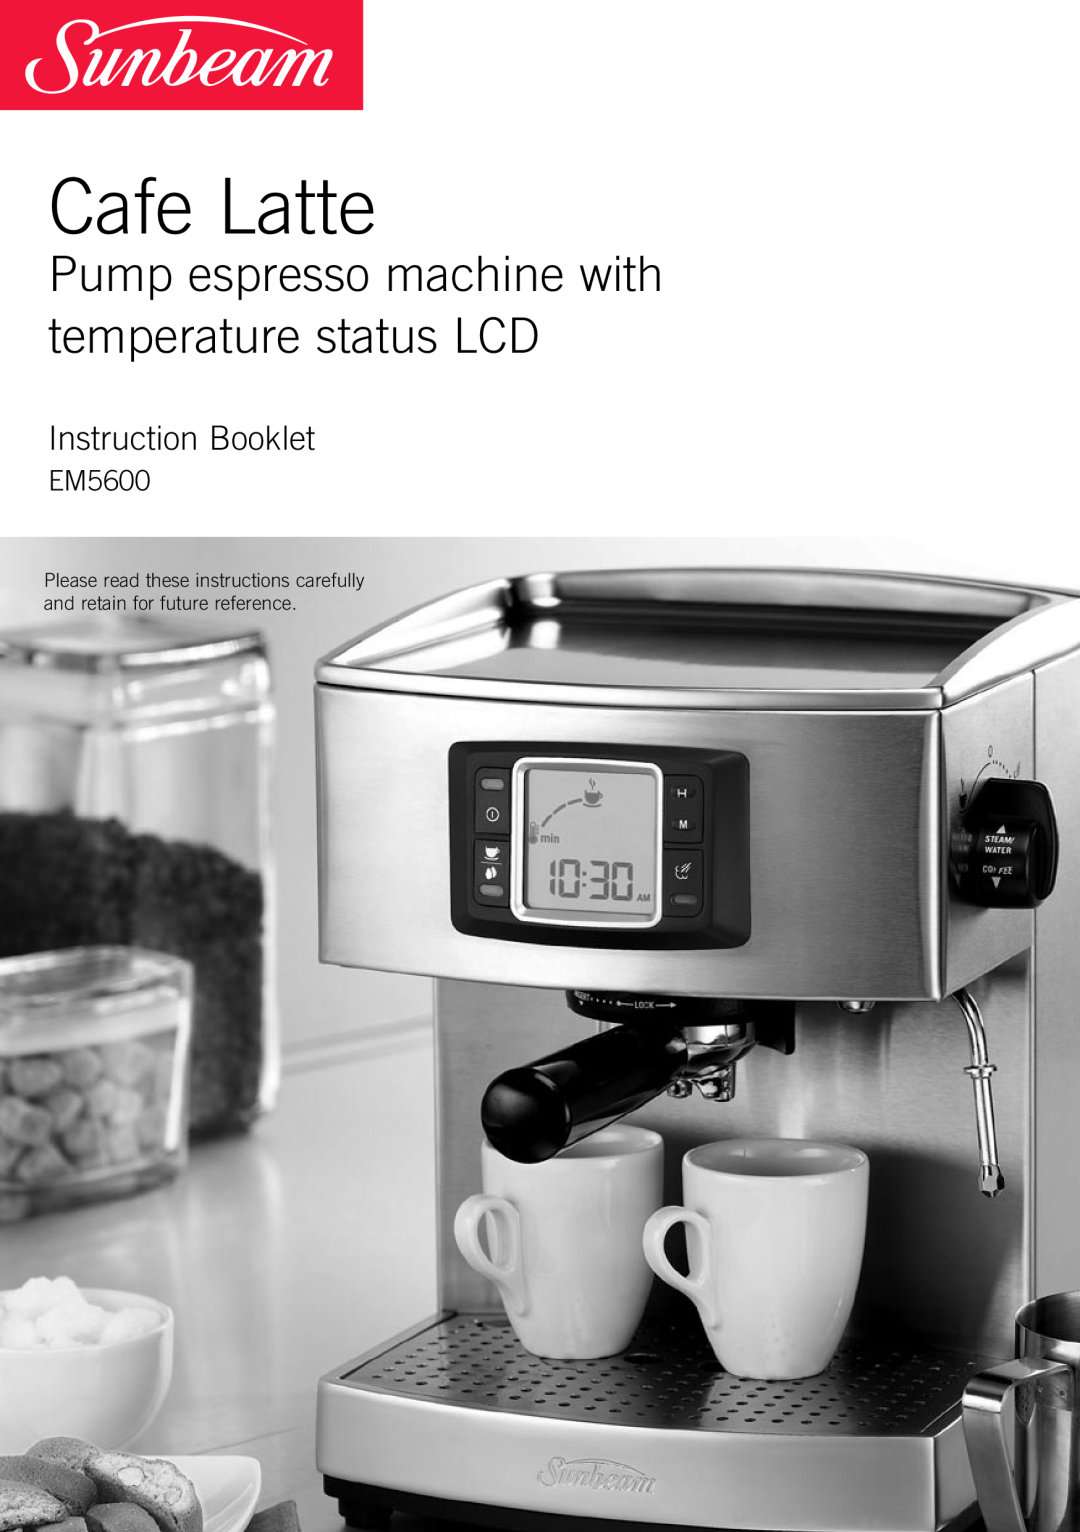 Sunbeam EM5600 manual Cover from Energi, Cafe Latte, Pump espresso machine with temperature status LCD 